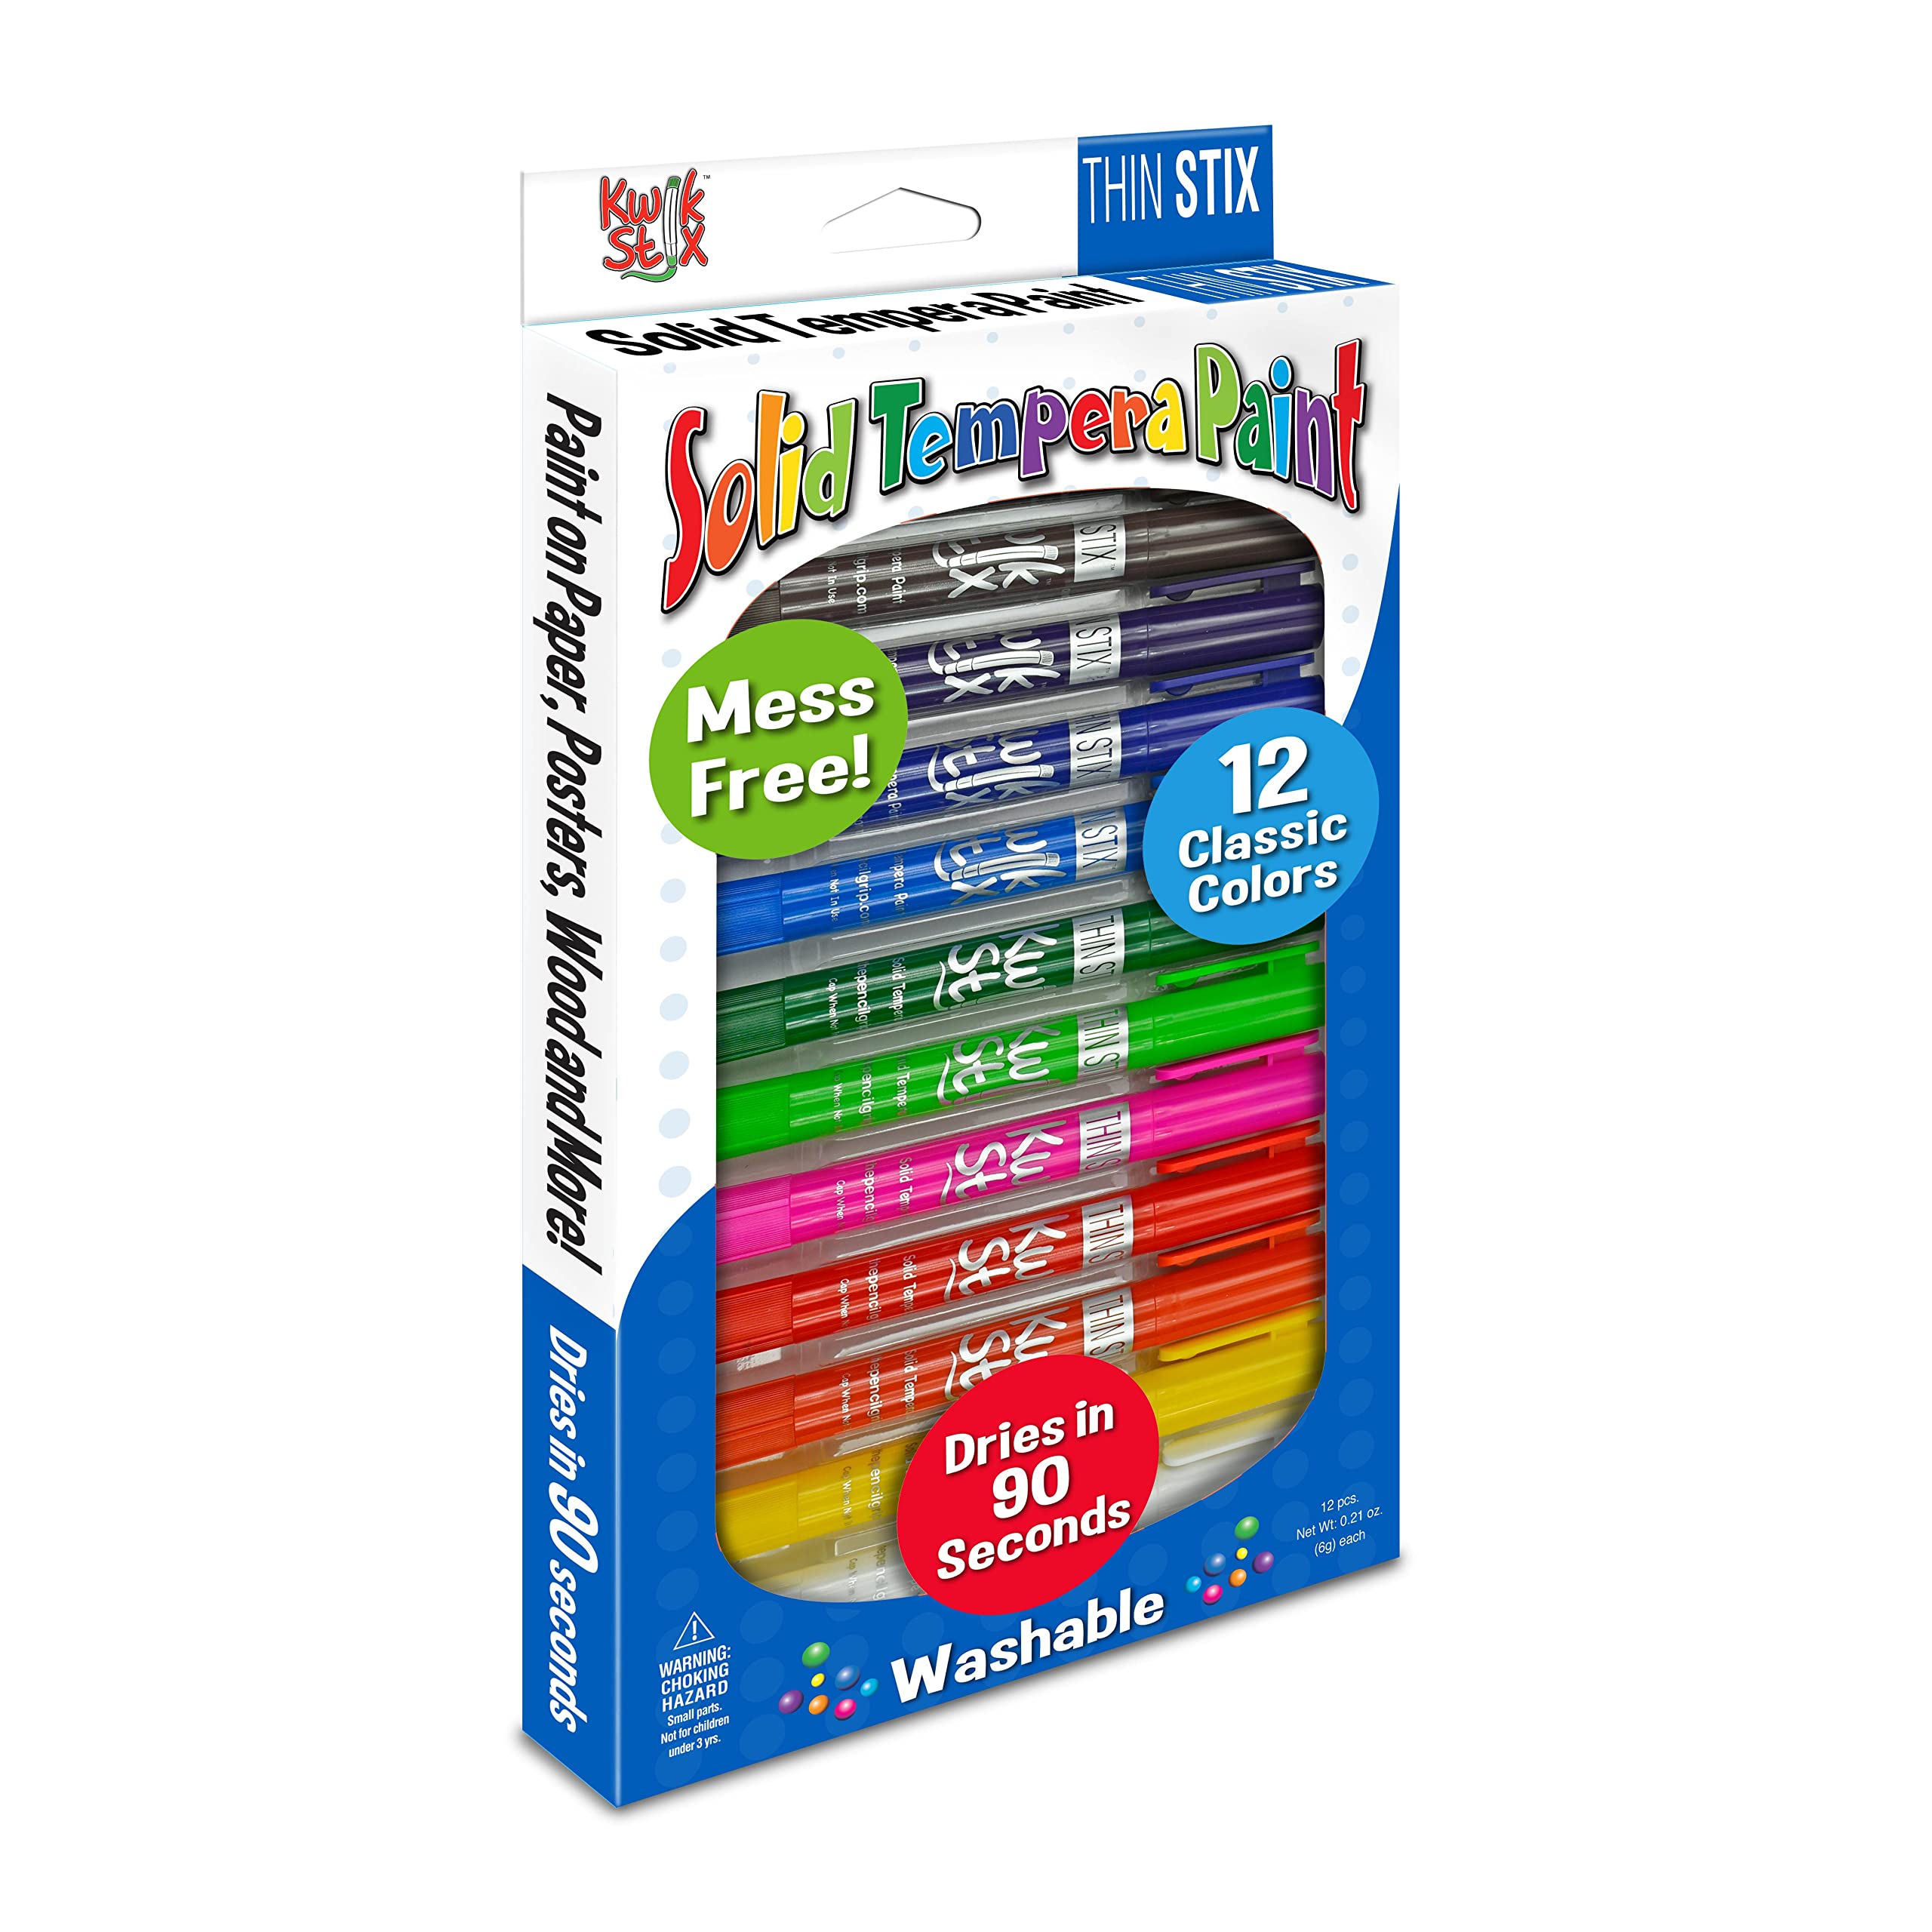 The Pencil Grip Kwik Stix Solid Tempera Paints, Thin Stix Paint Pens, Super Quick Drying, 12 Classic Colors for Children - 12 Pack - TPG-608